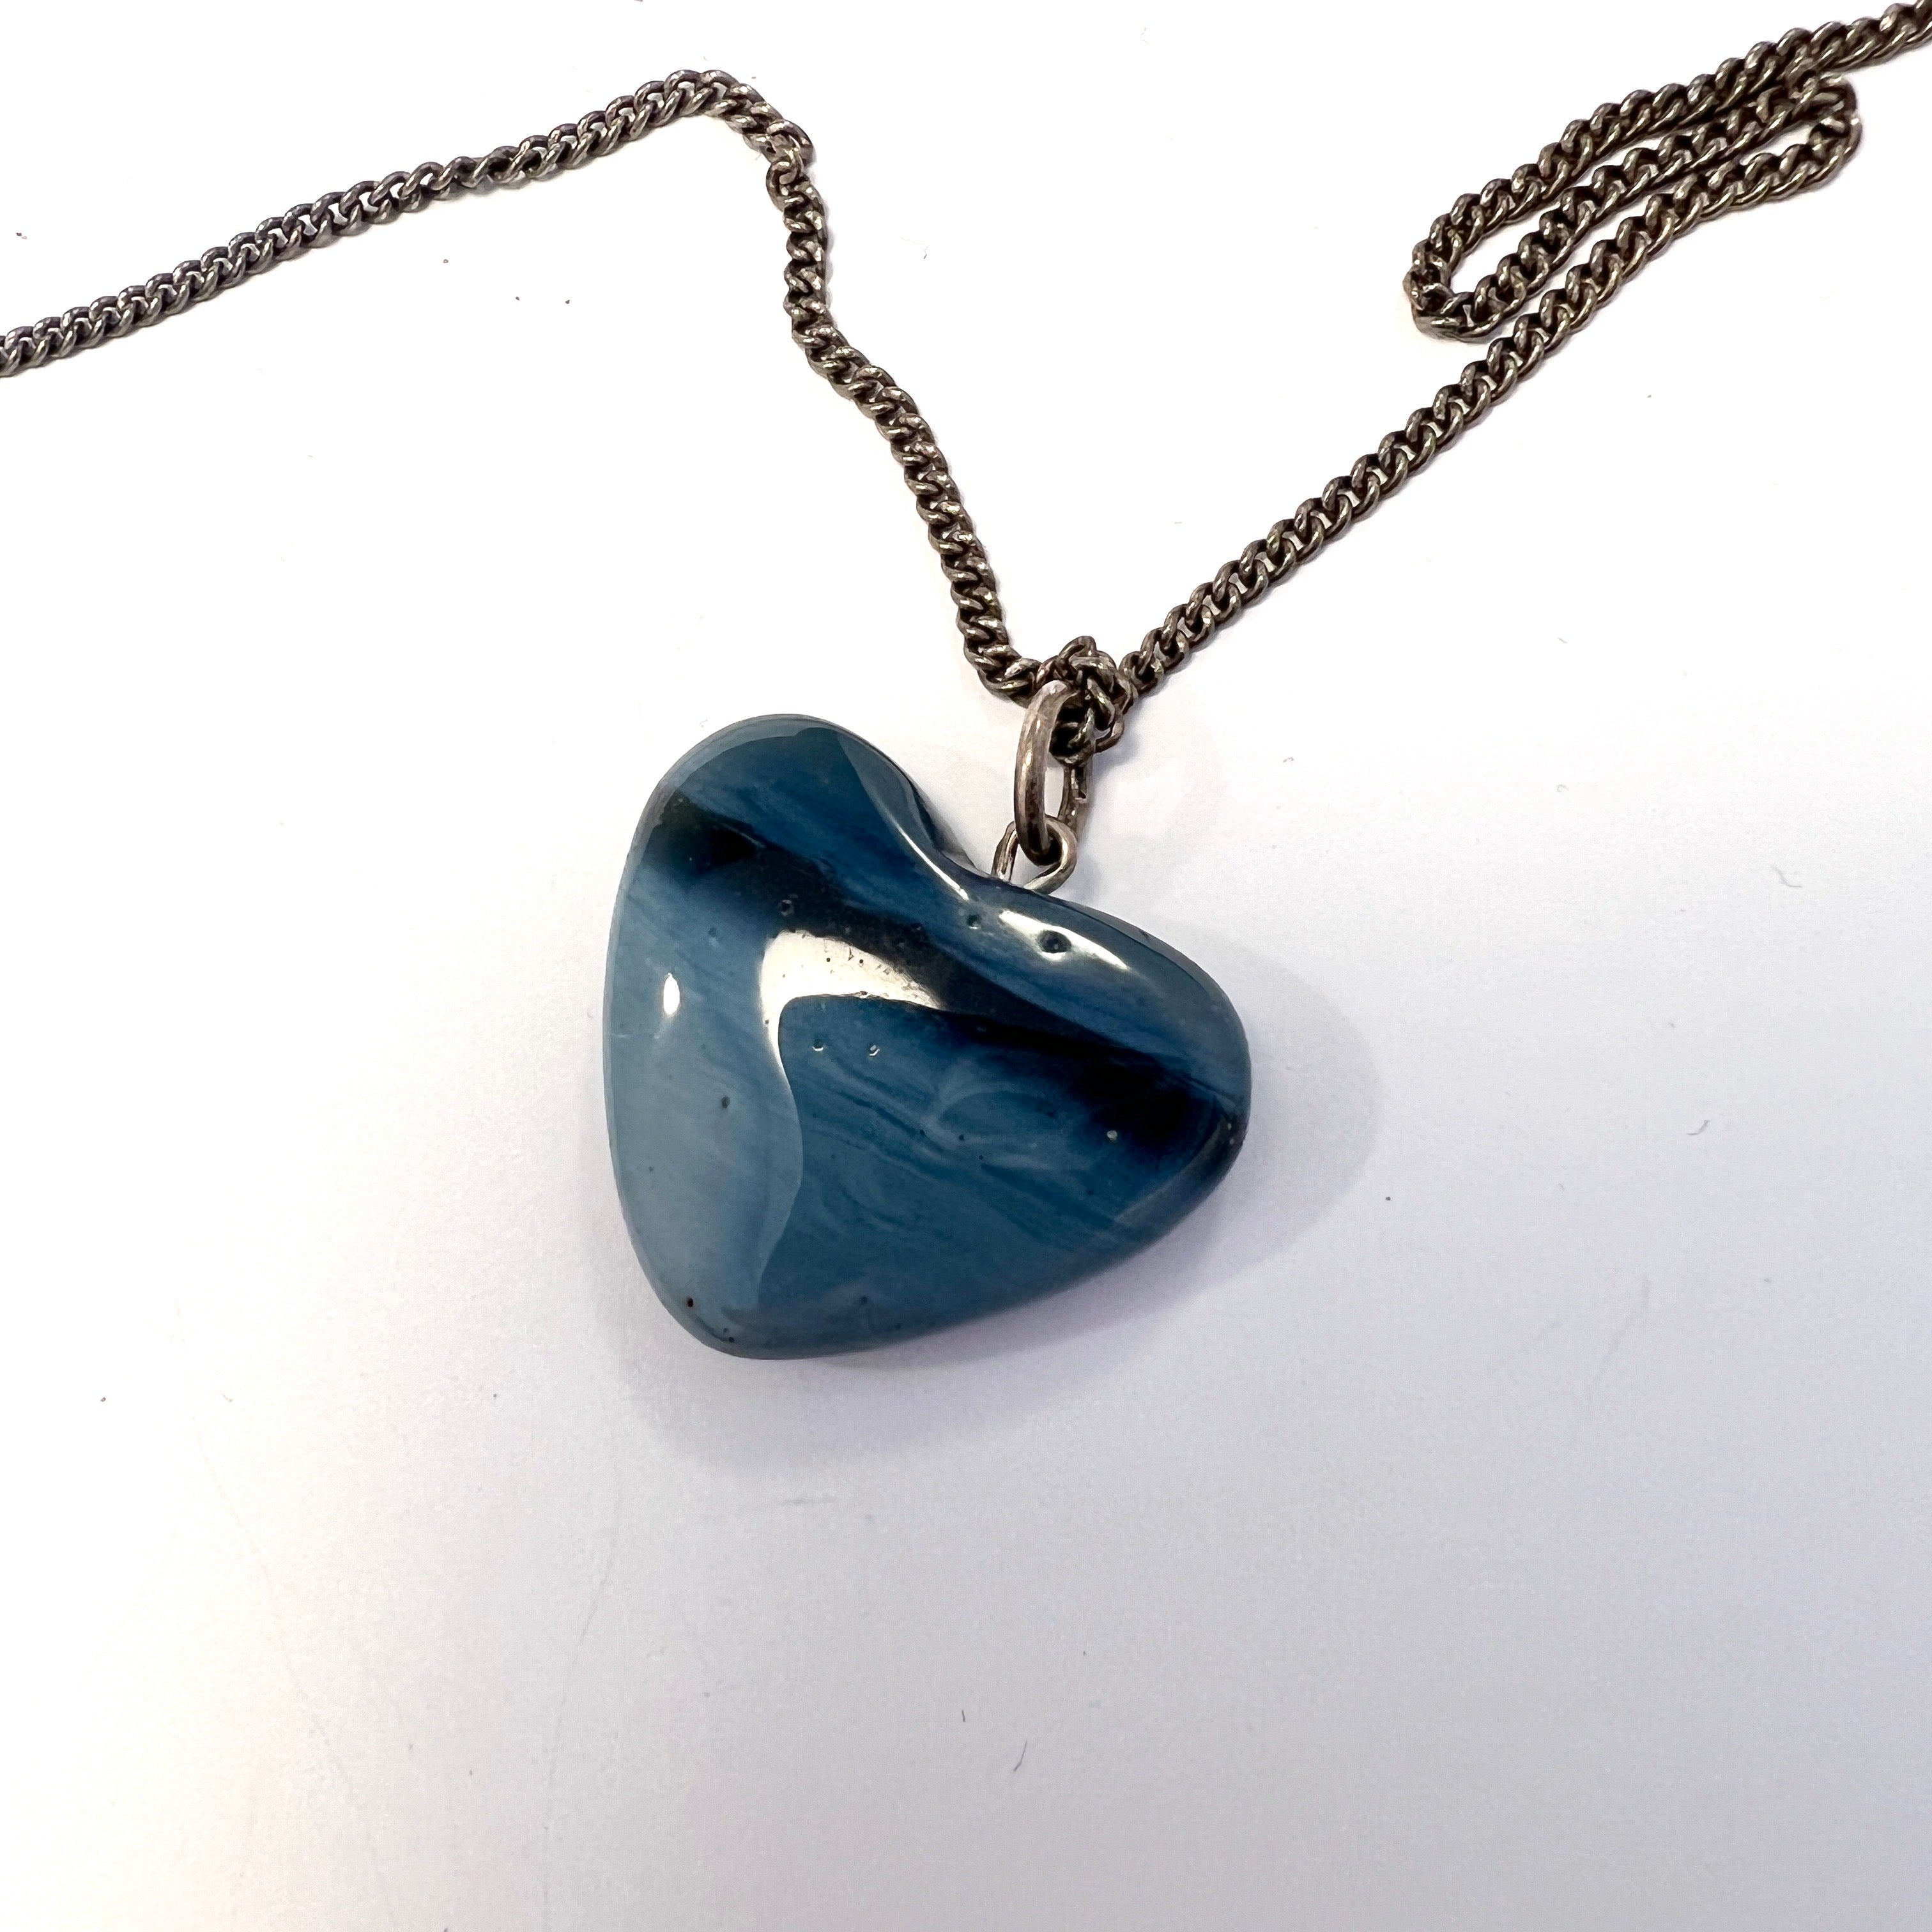 North Sweden c 1960s. Silver Bergslagen-stone Heart Pendant Necklace.